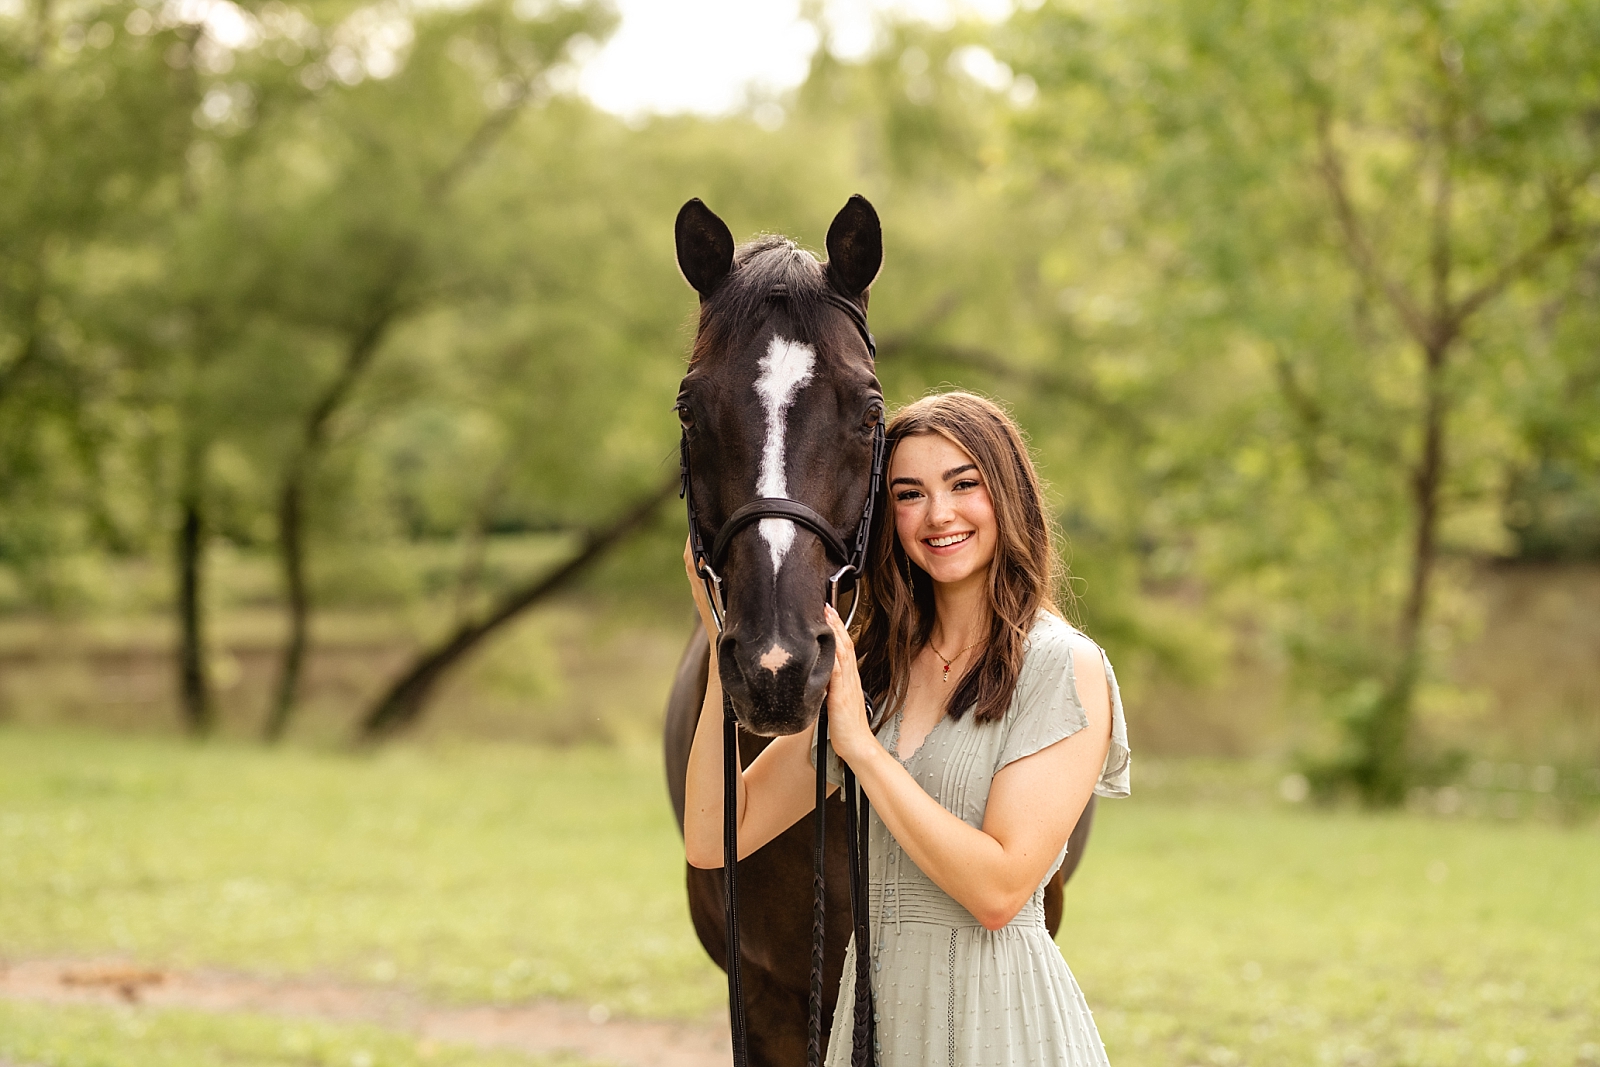 Alabama Hunter Jumper Association member has photos taken with her horse at Fox Lake Farm in Birmingham, Alabama.